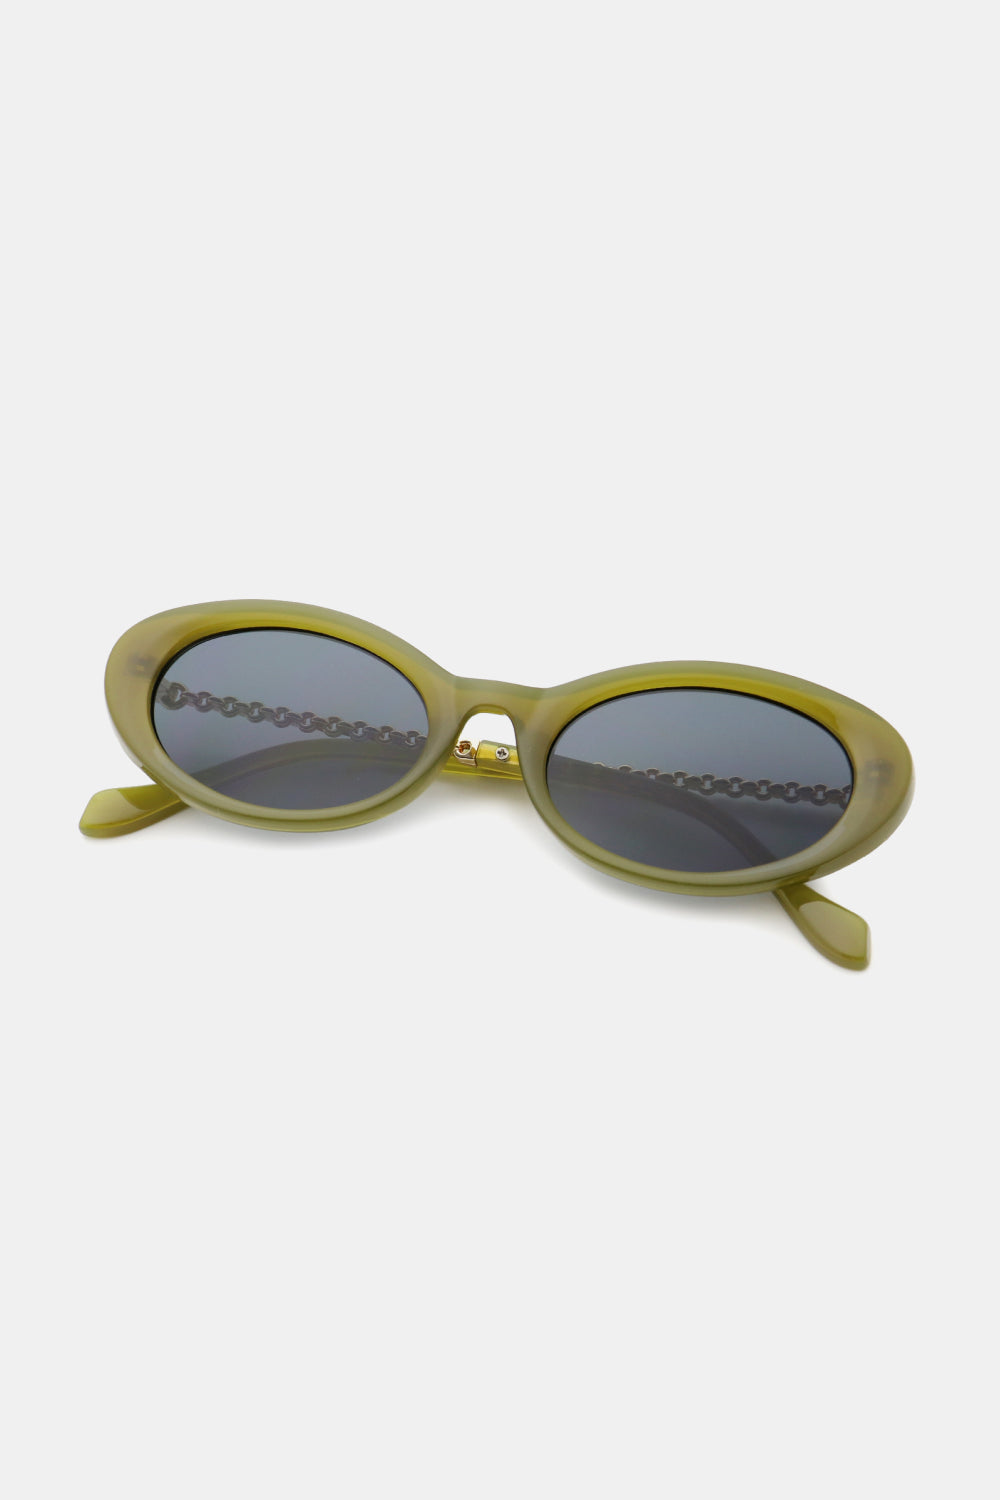 HANNAH MEA Polycarbonate Frame Cat-Eye Sunglasses